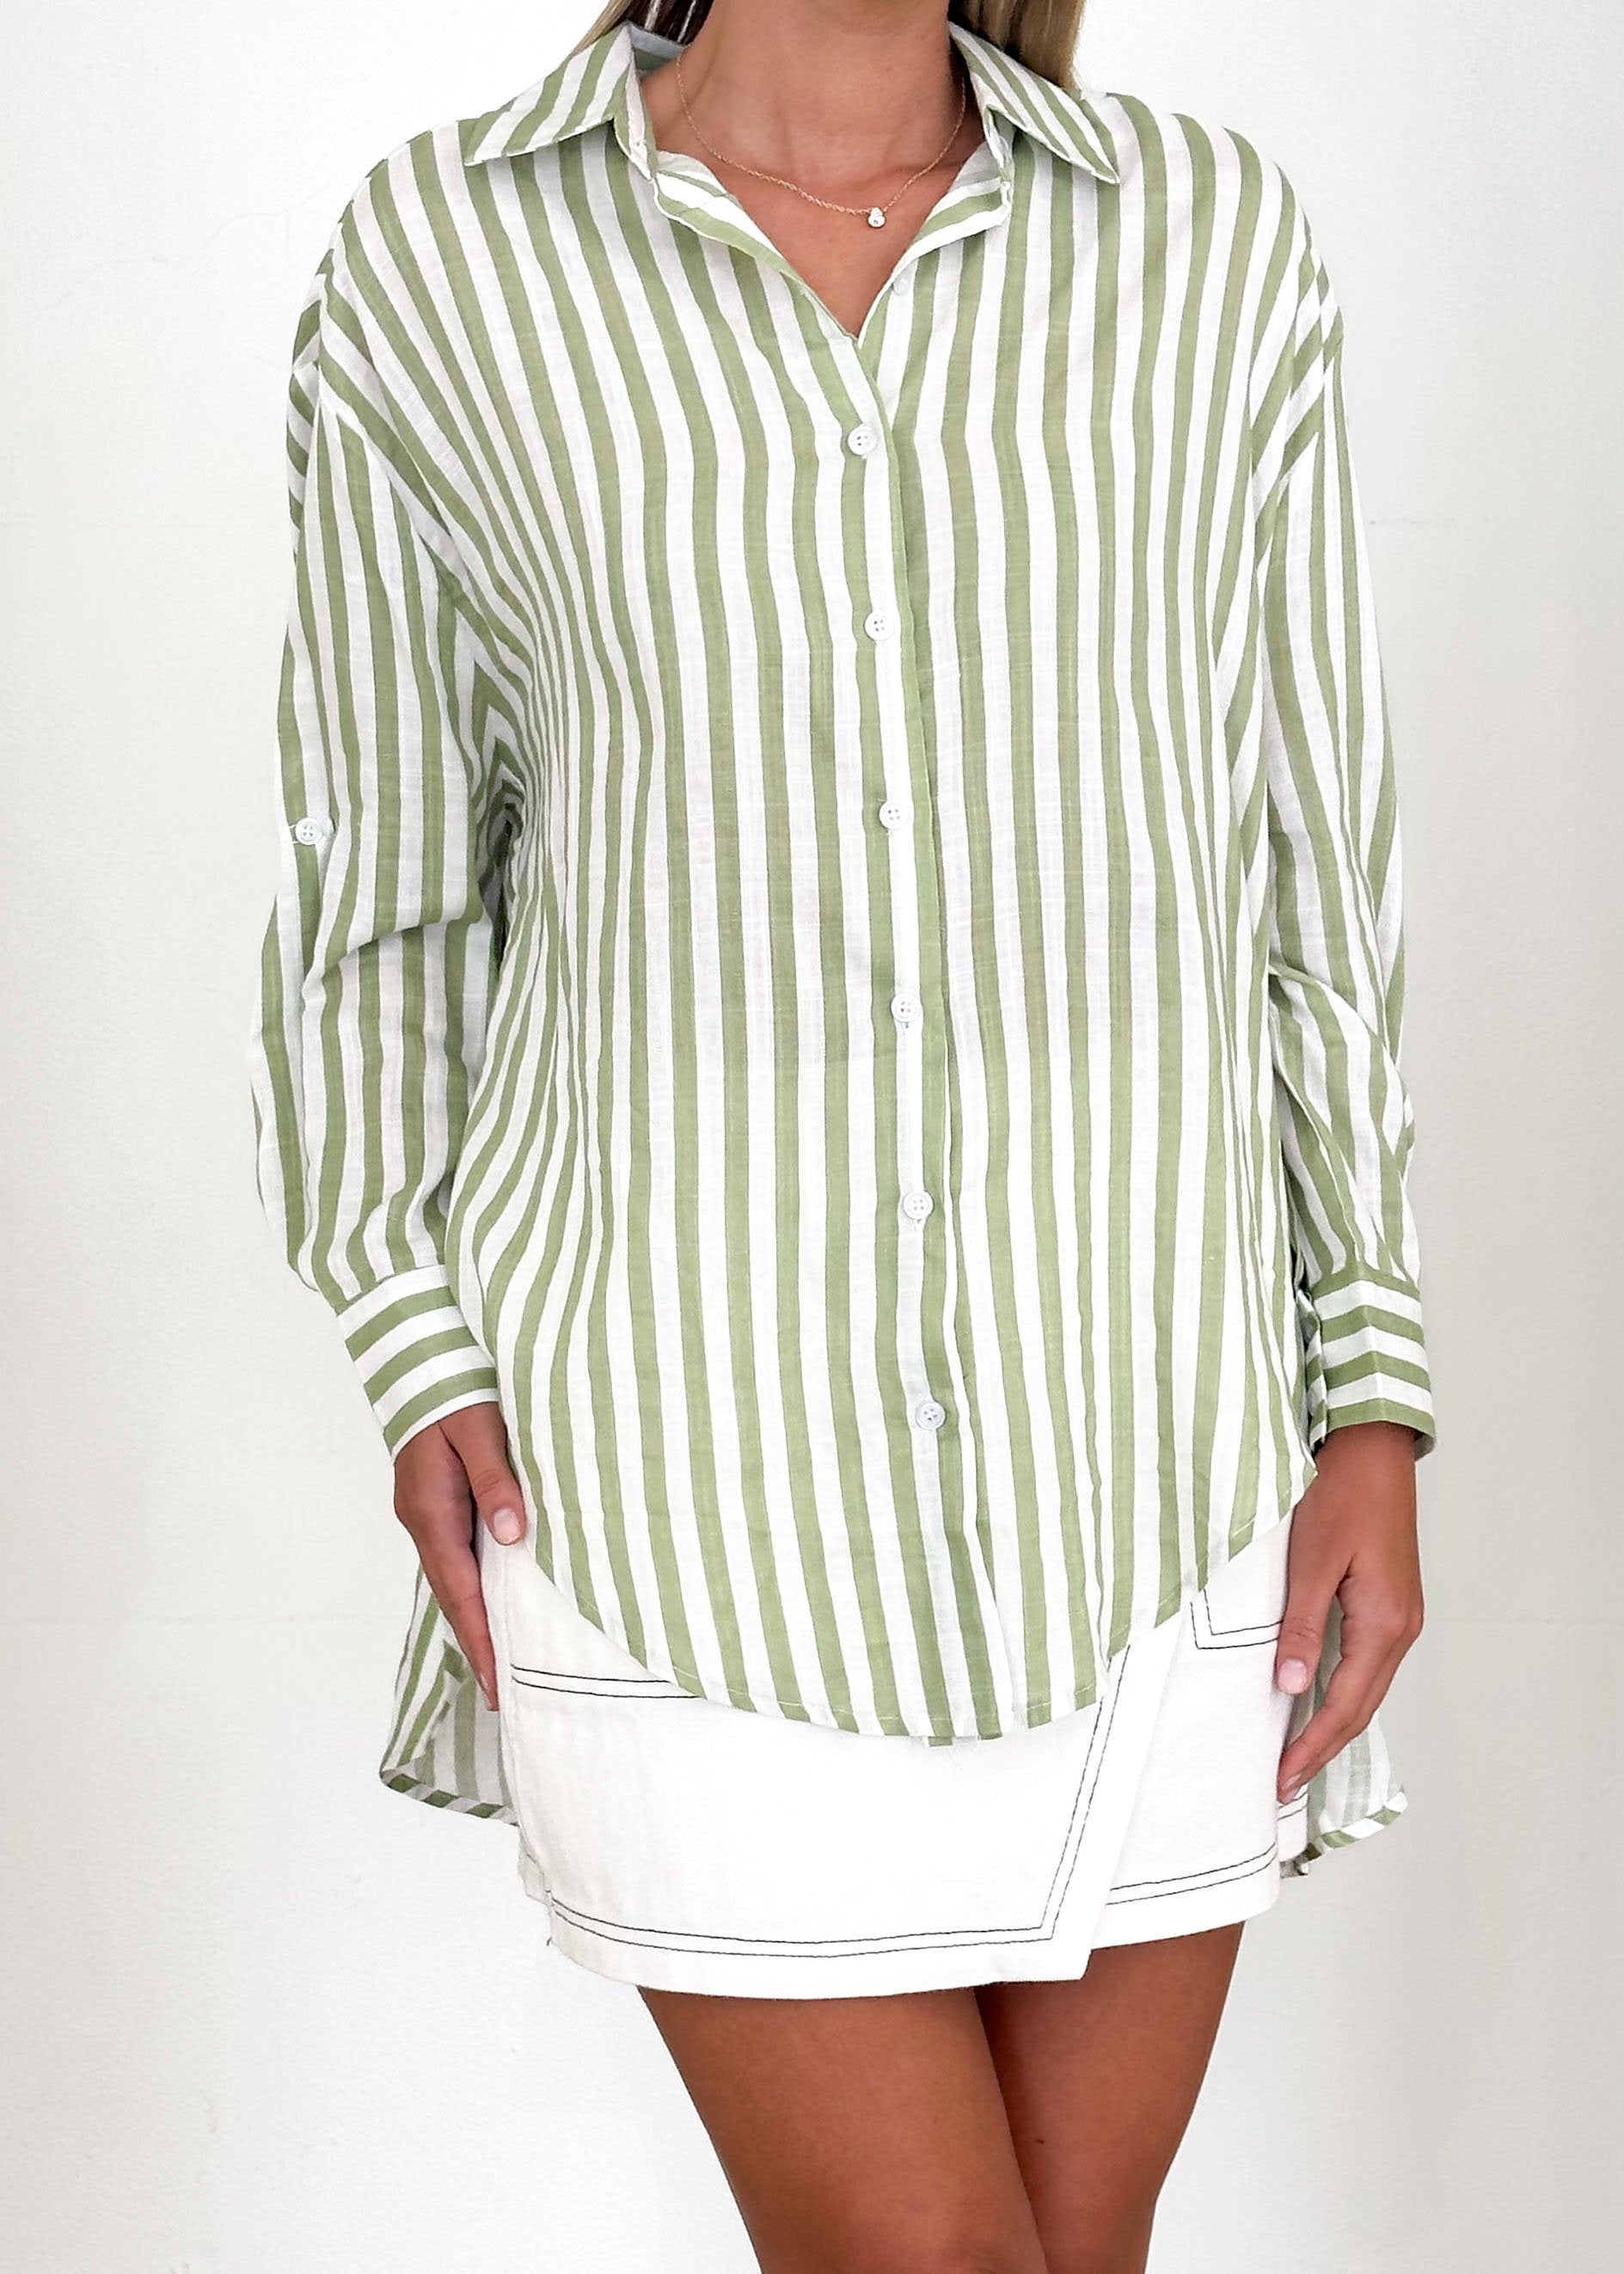 Onesa Shirt - Sage Stripe